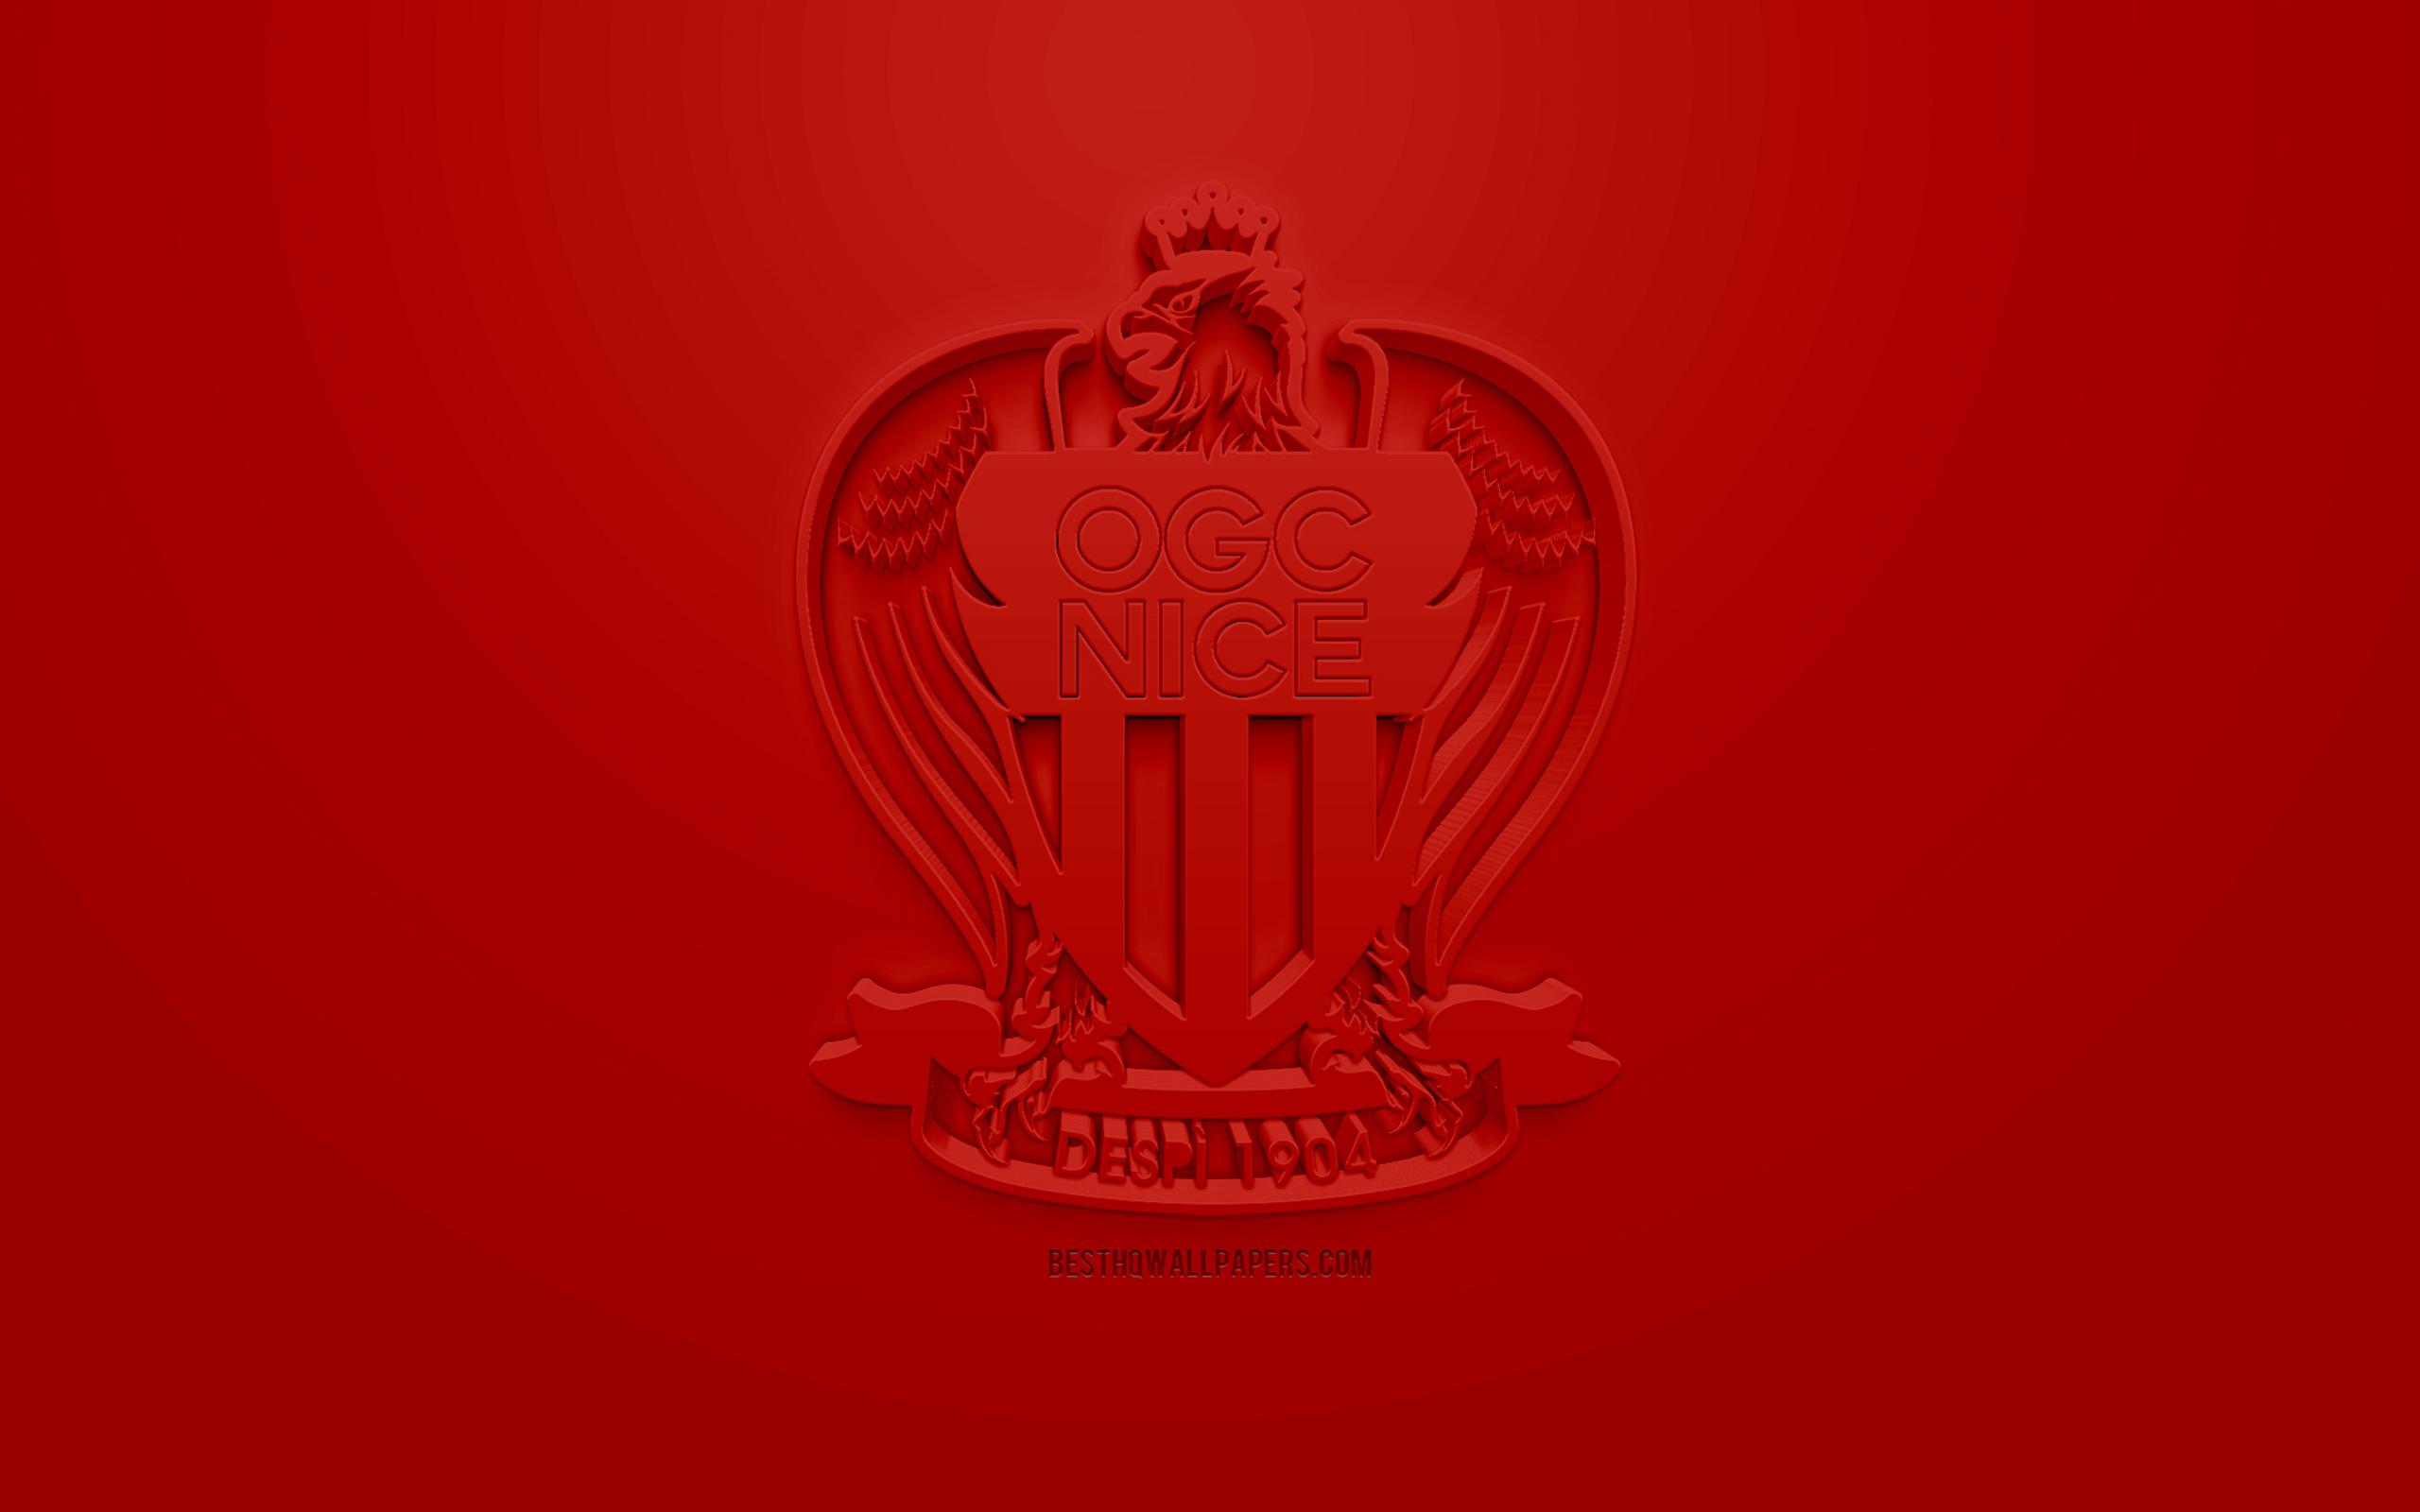 Download wallpaper OGC Nice, creative 3D logo, red background, 3D